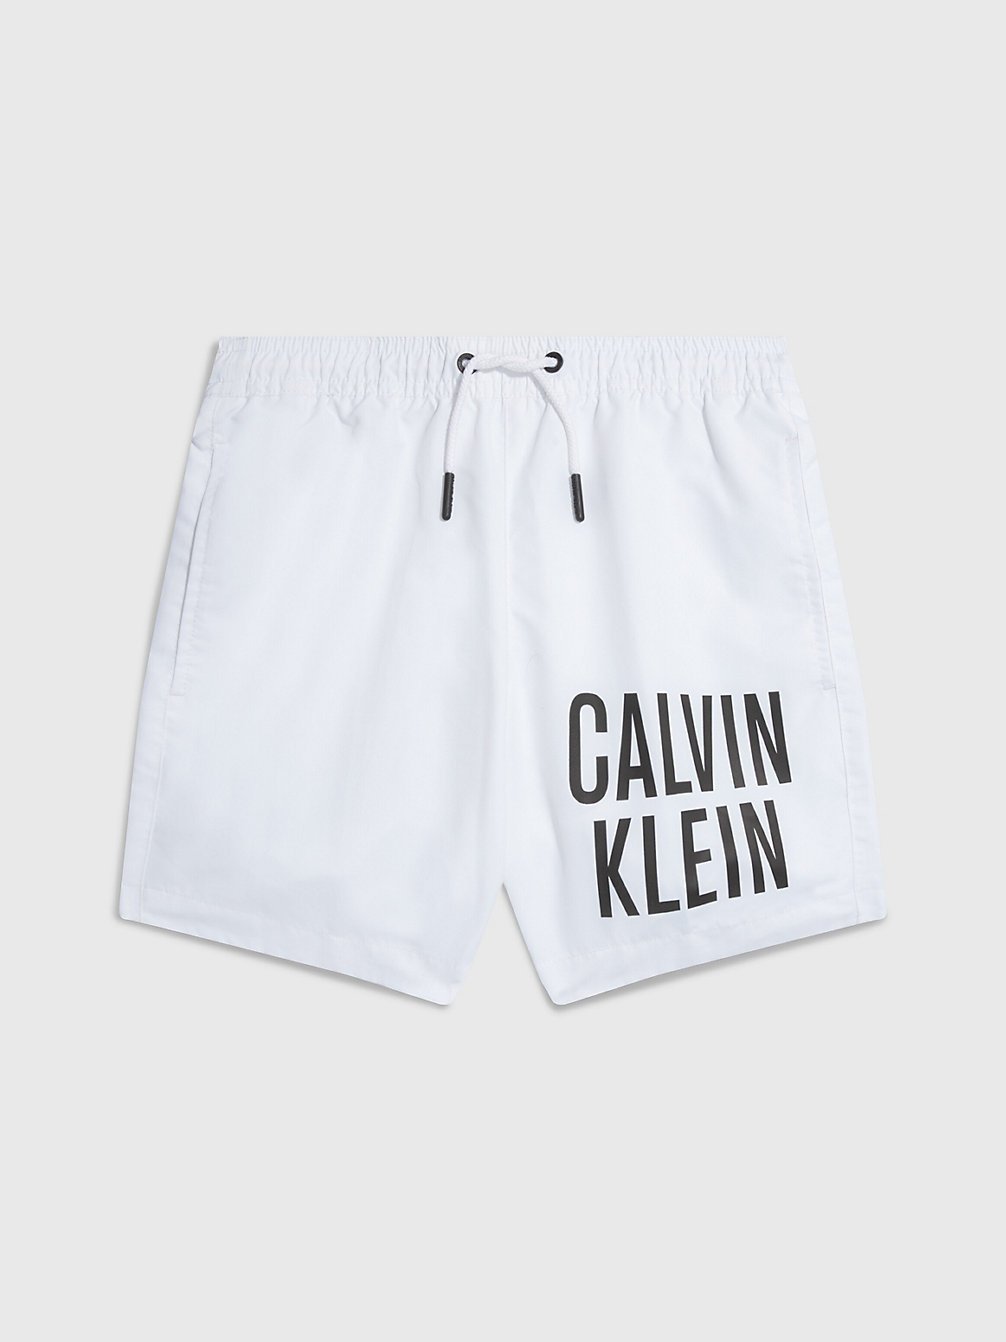 PVH CLASSIC WHITE > Boys Swim Trunks - Intense Power > undefined boys - Calvin Klein